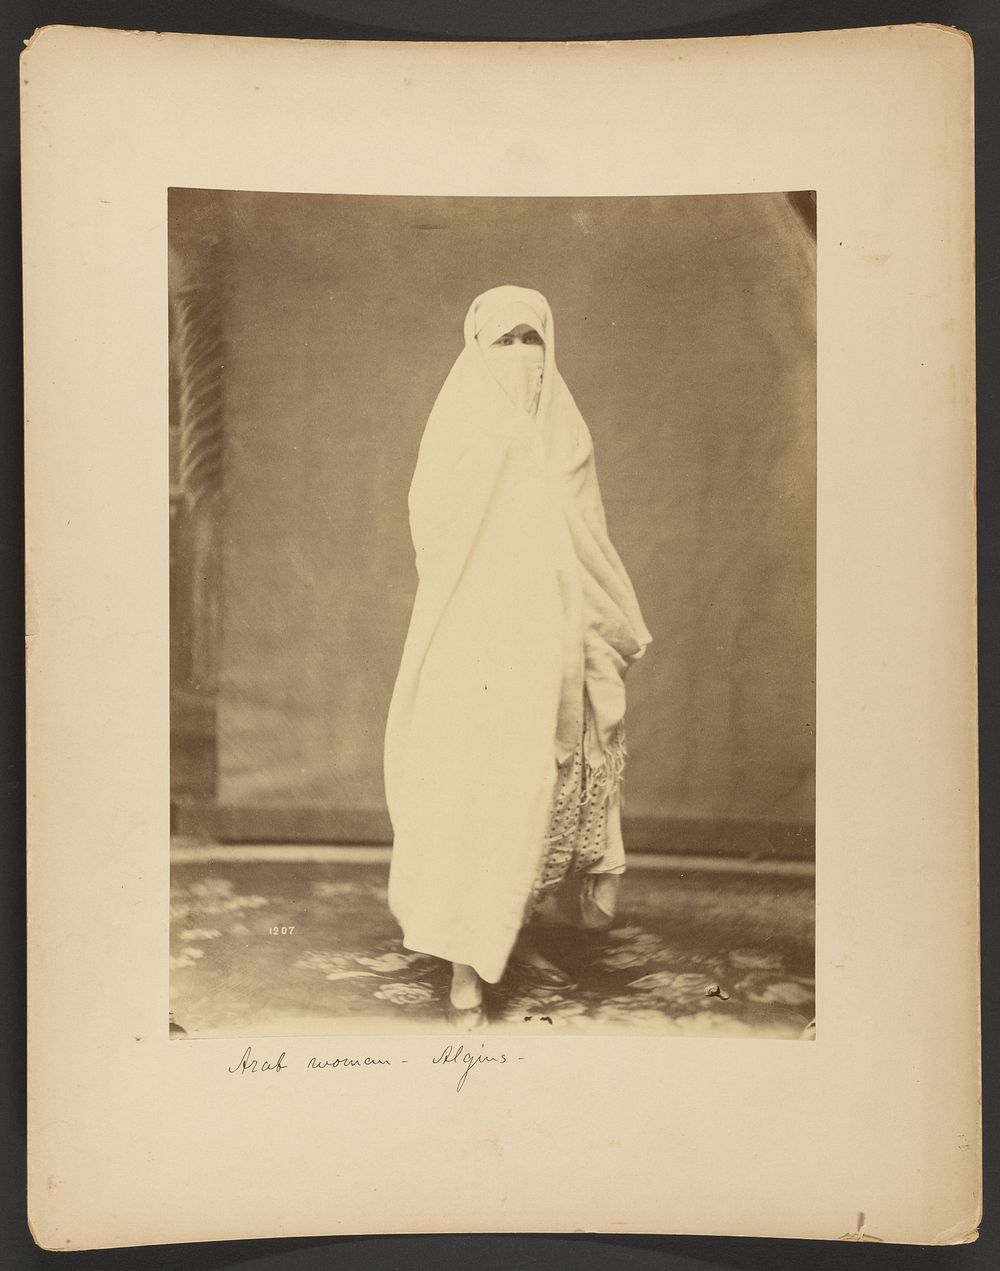 Woman wearing white robes